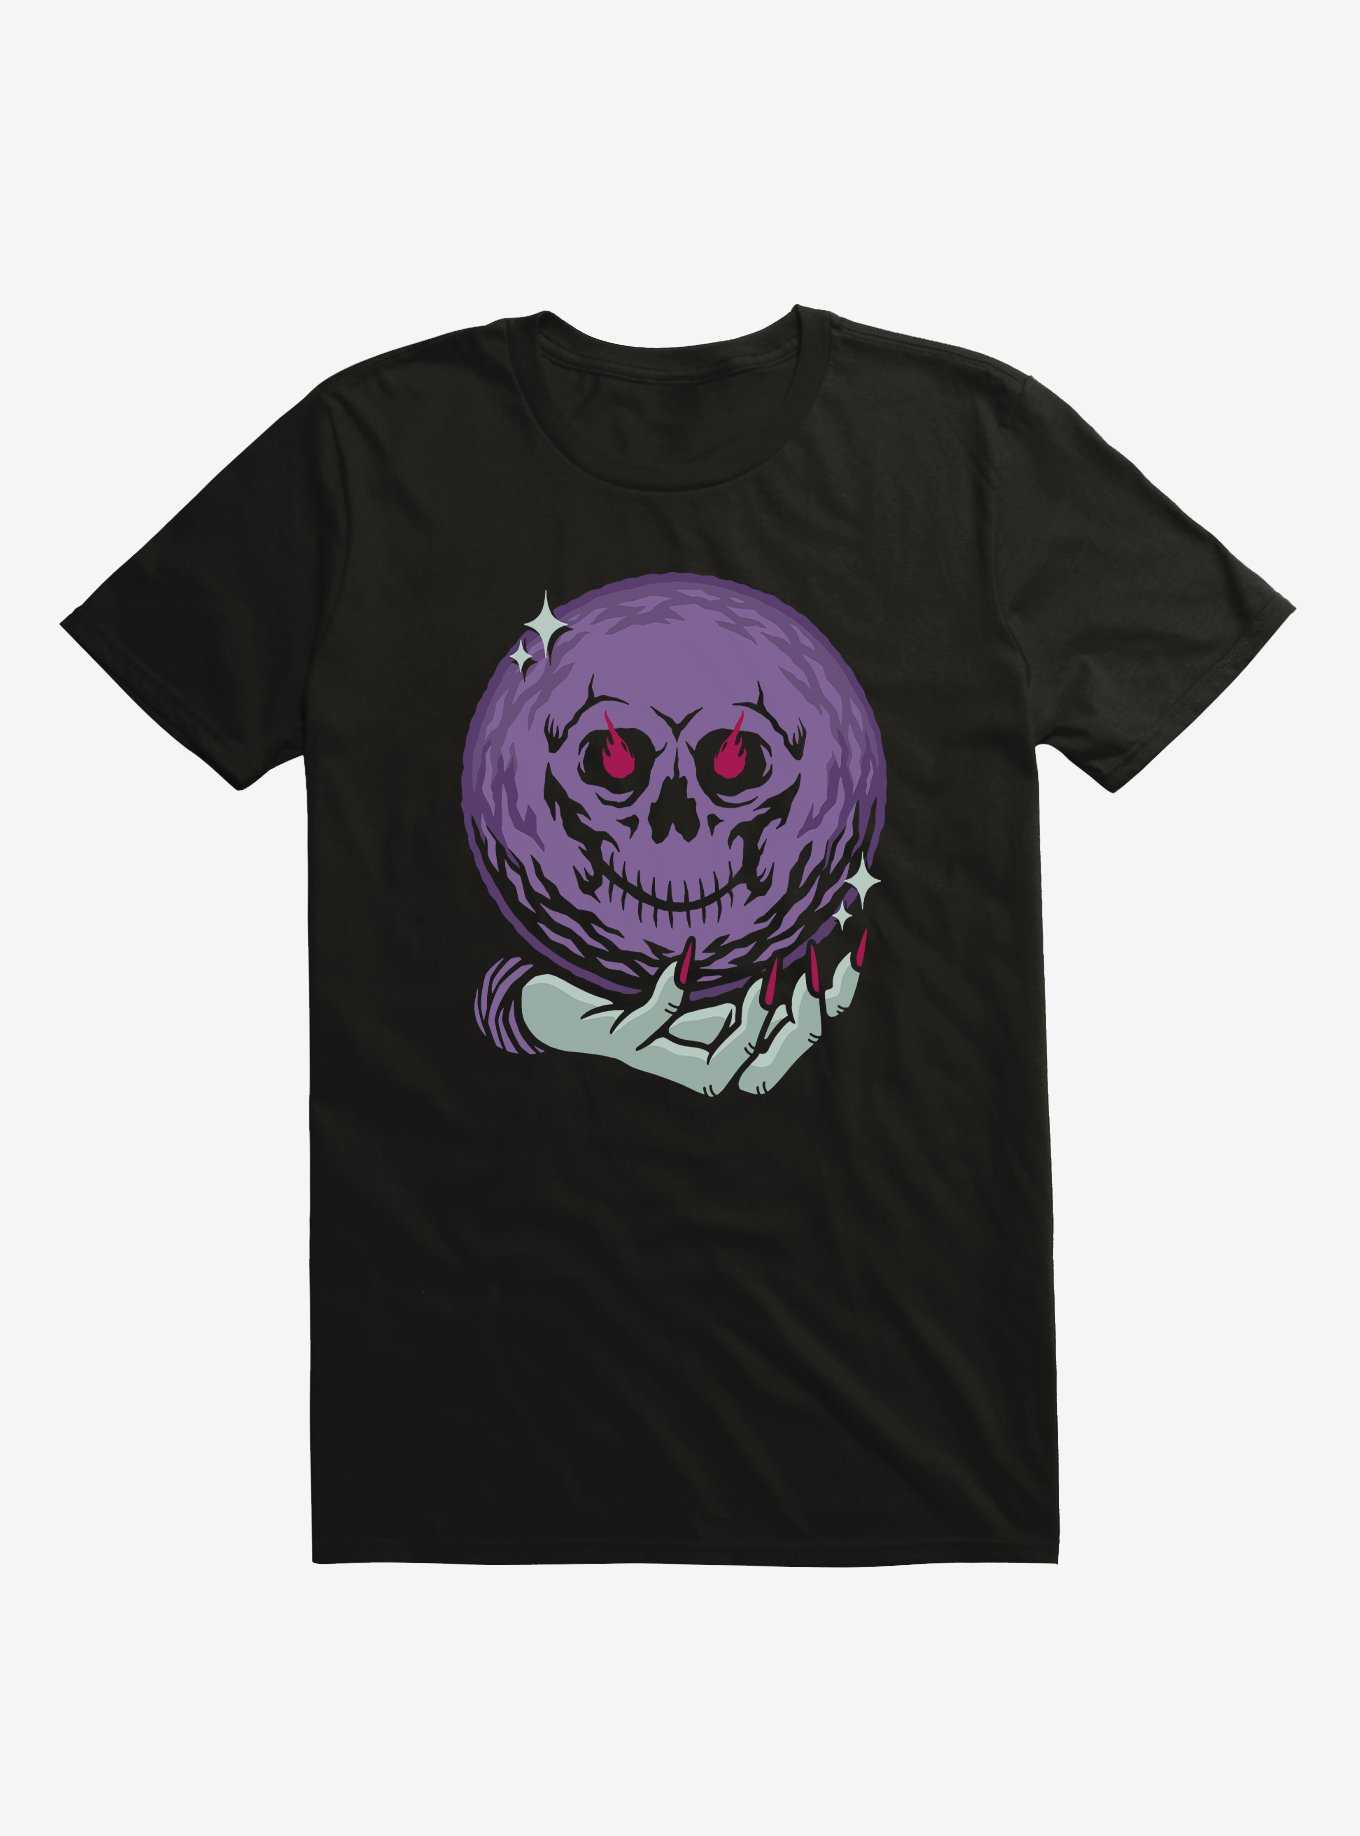 Death Crystal Ball T-Shirt By Deniart, , hi-res